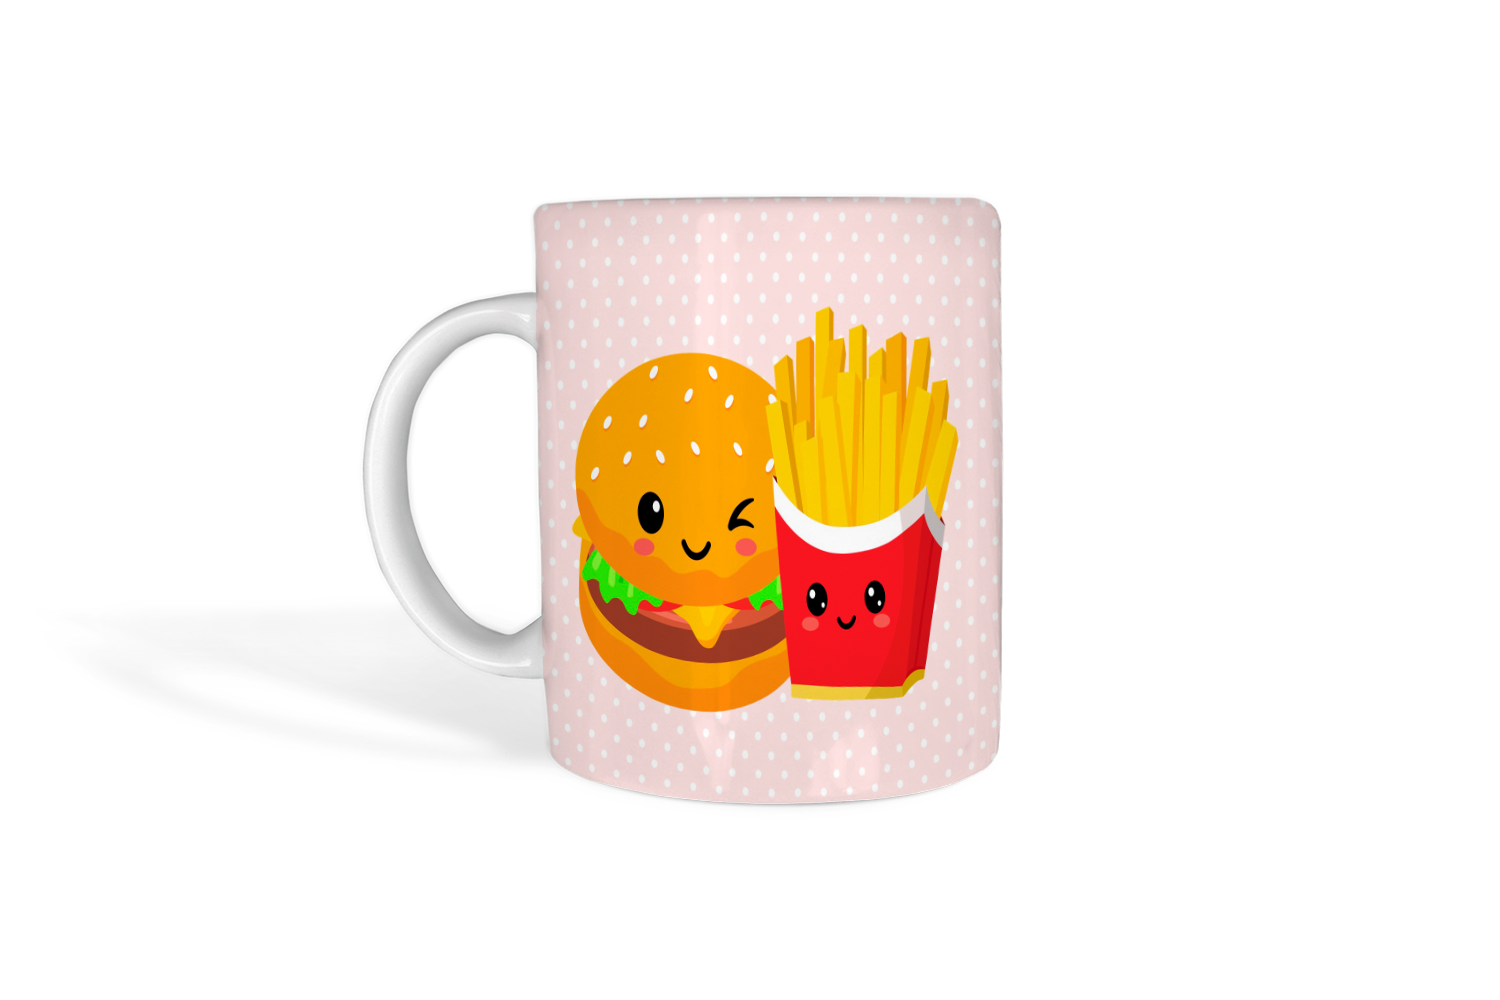 Coffee mug with a hamburger and fries on it.